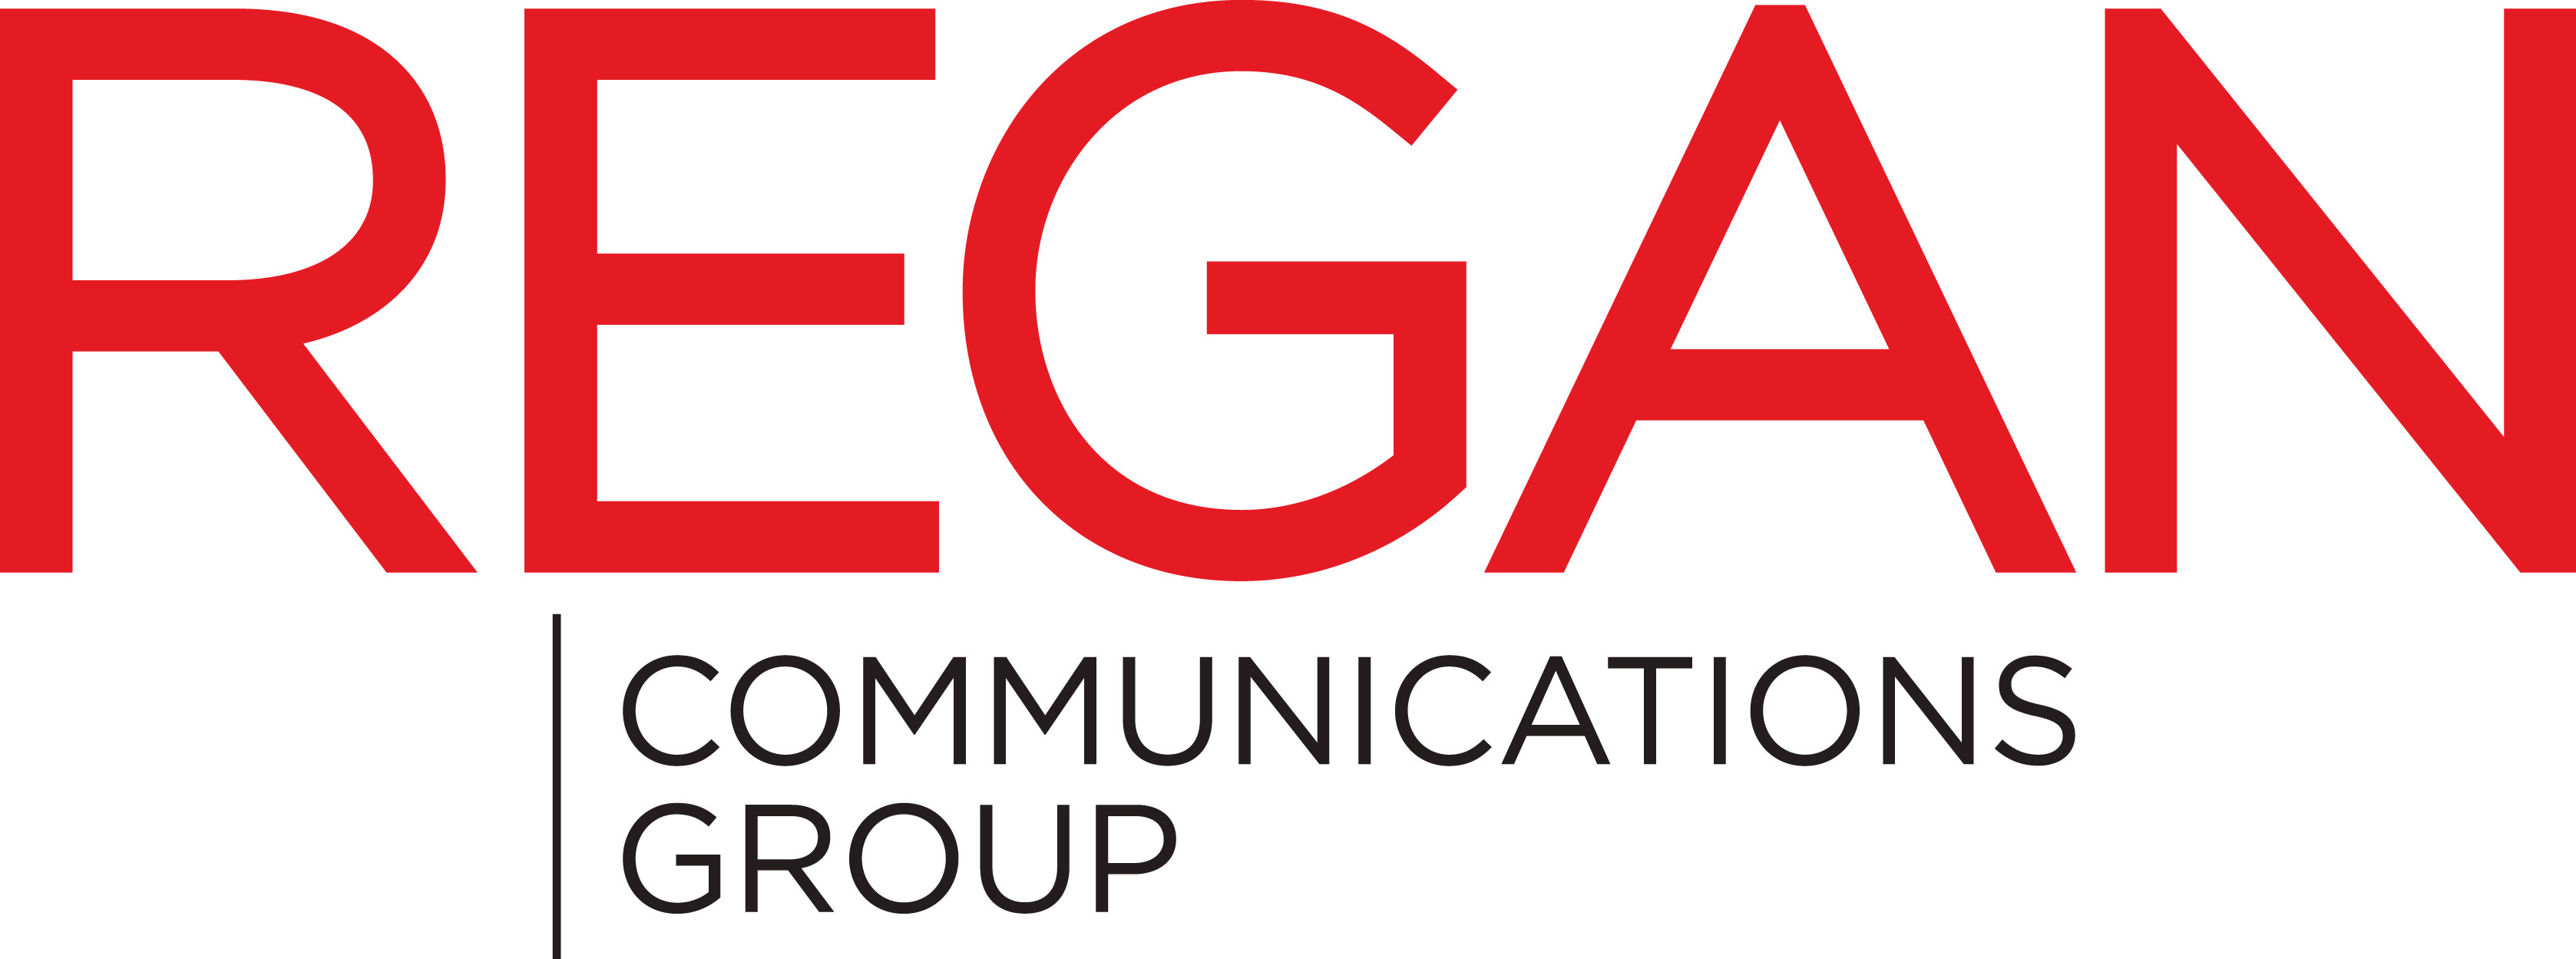  Best Public Relations Agency Logo: Regan Communications Group